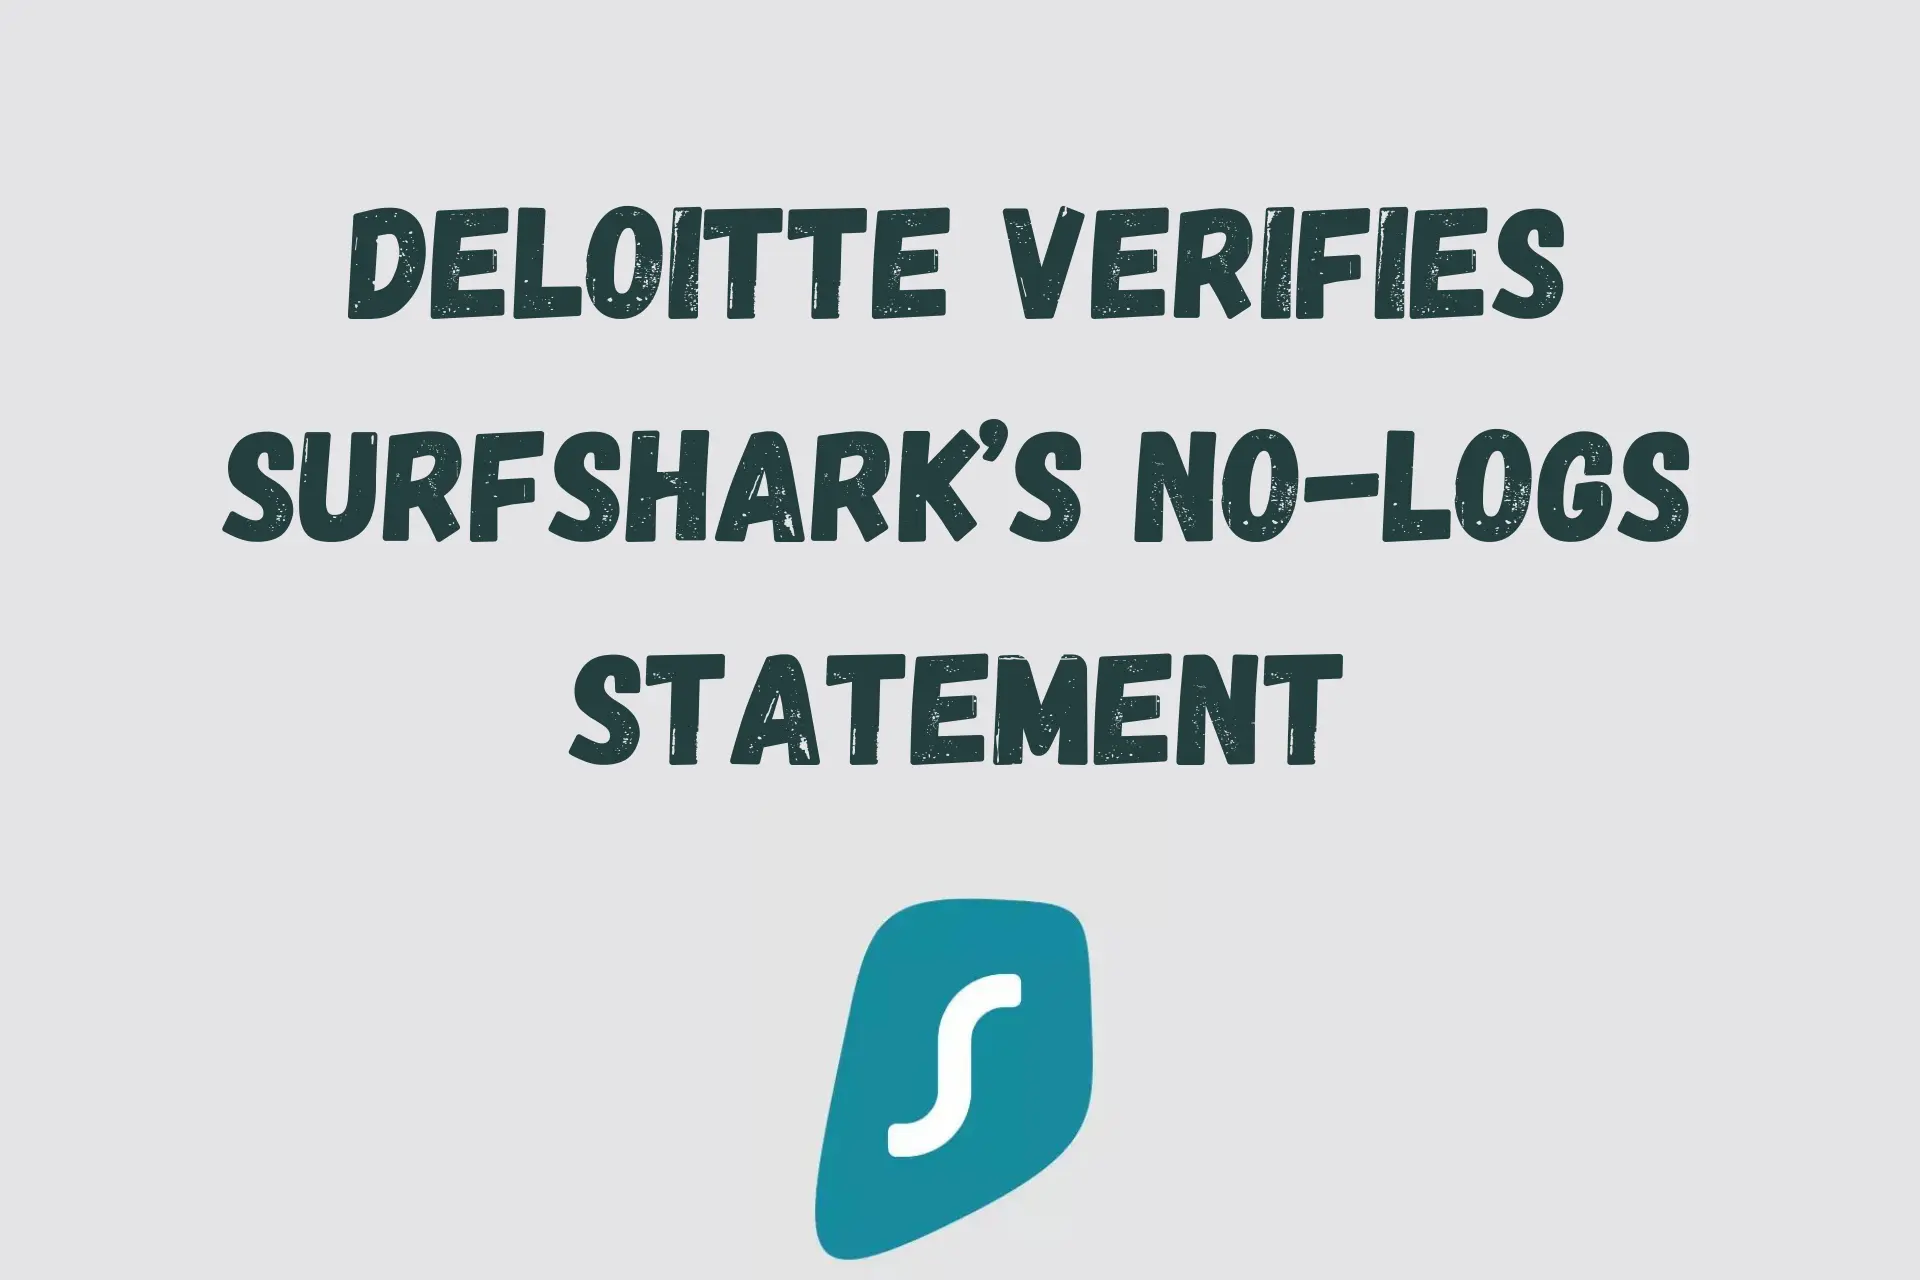 Deloitte verifies Surfshark's no-logs statement